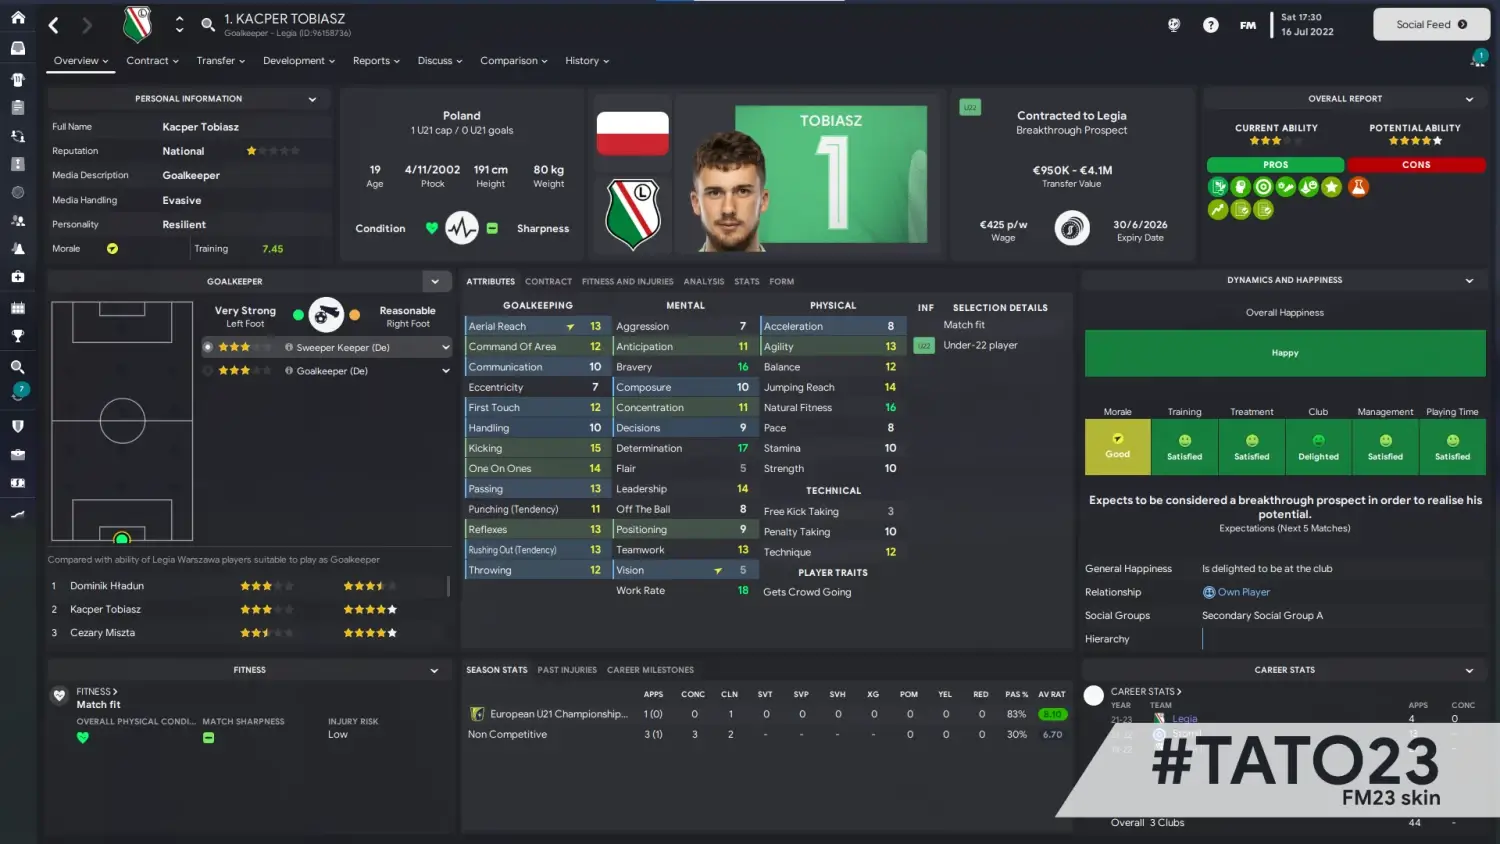 Football Manager 2023 Tato23 player profile